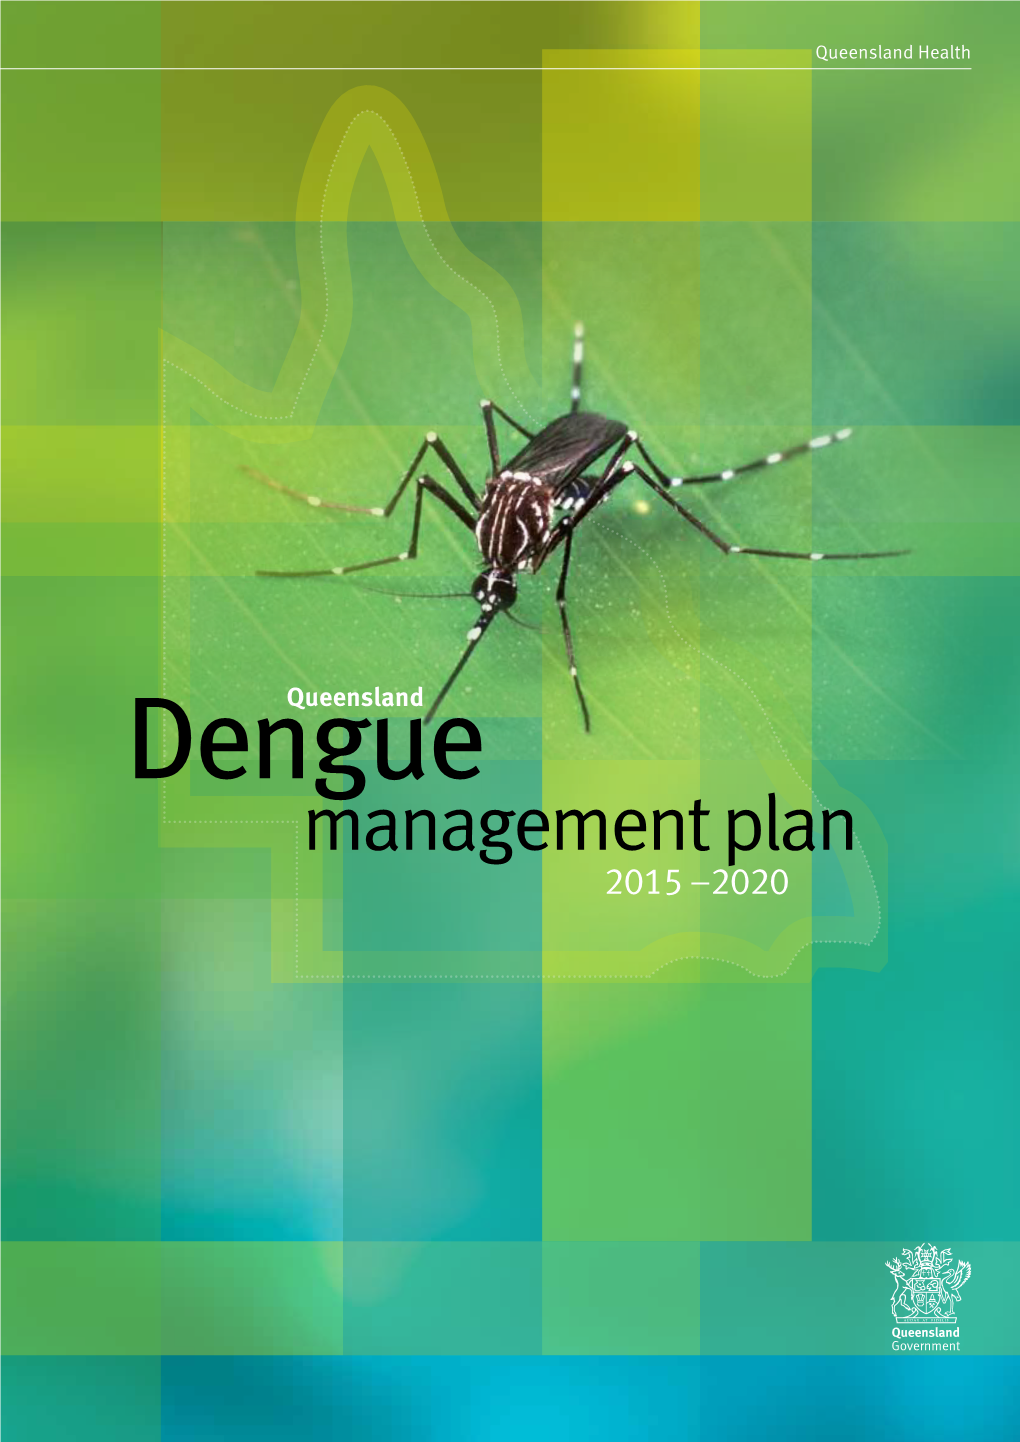 Queensland Dengue Management Plan 2015-2020